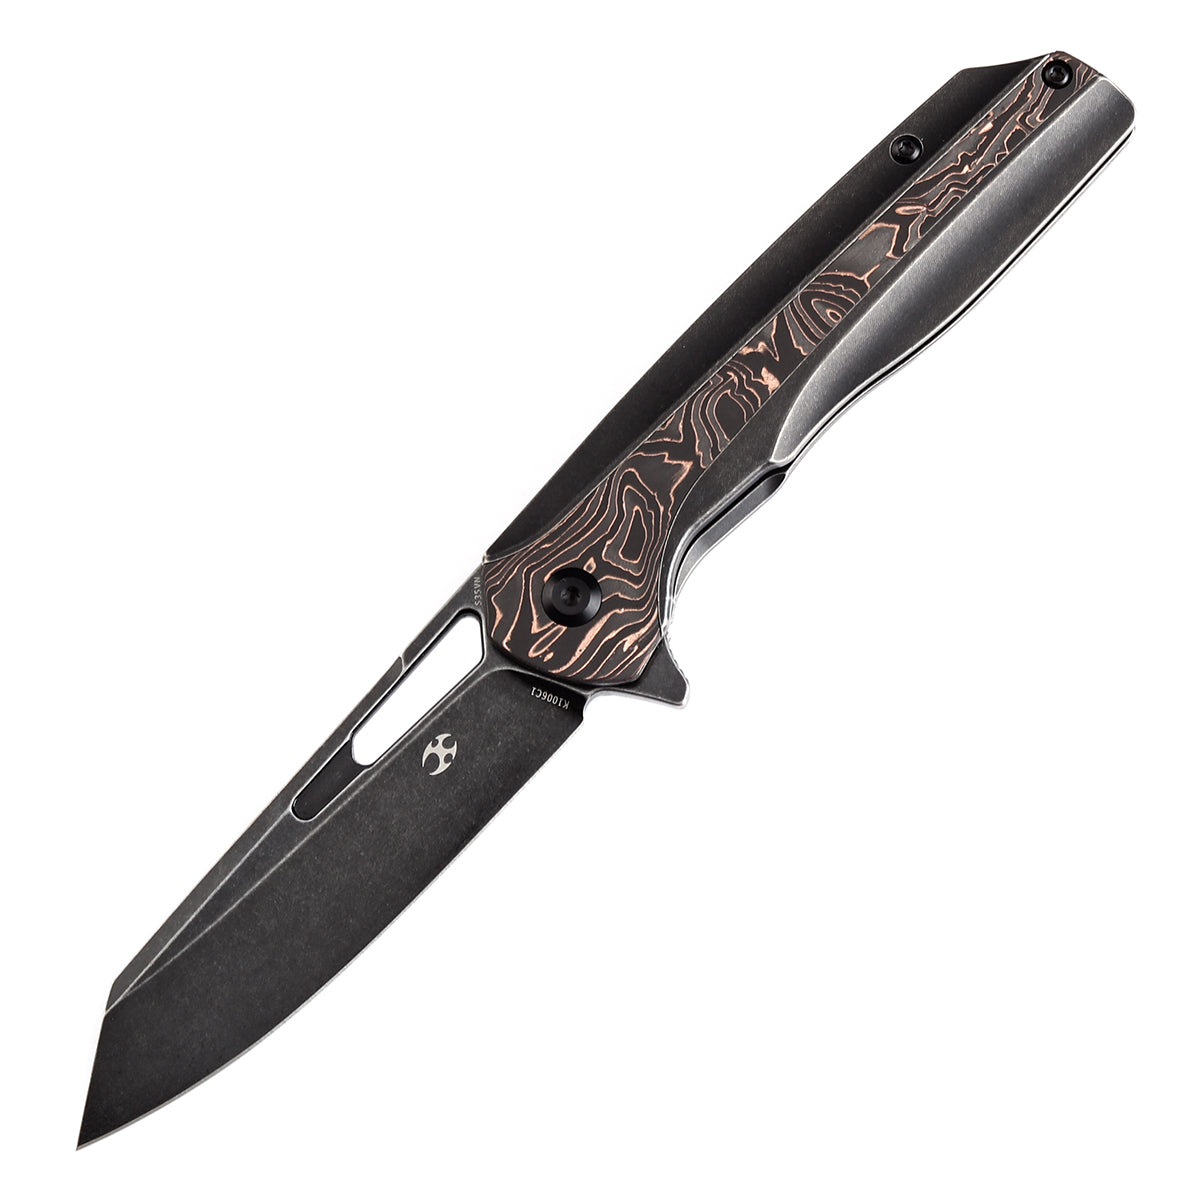 Kansept Shard K1006C1 CPM-S35VN Blade Copper Carbon Fiber Handle Folding Knife